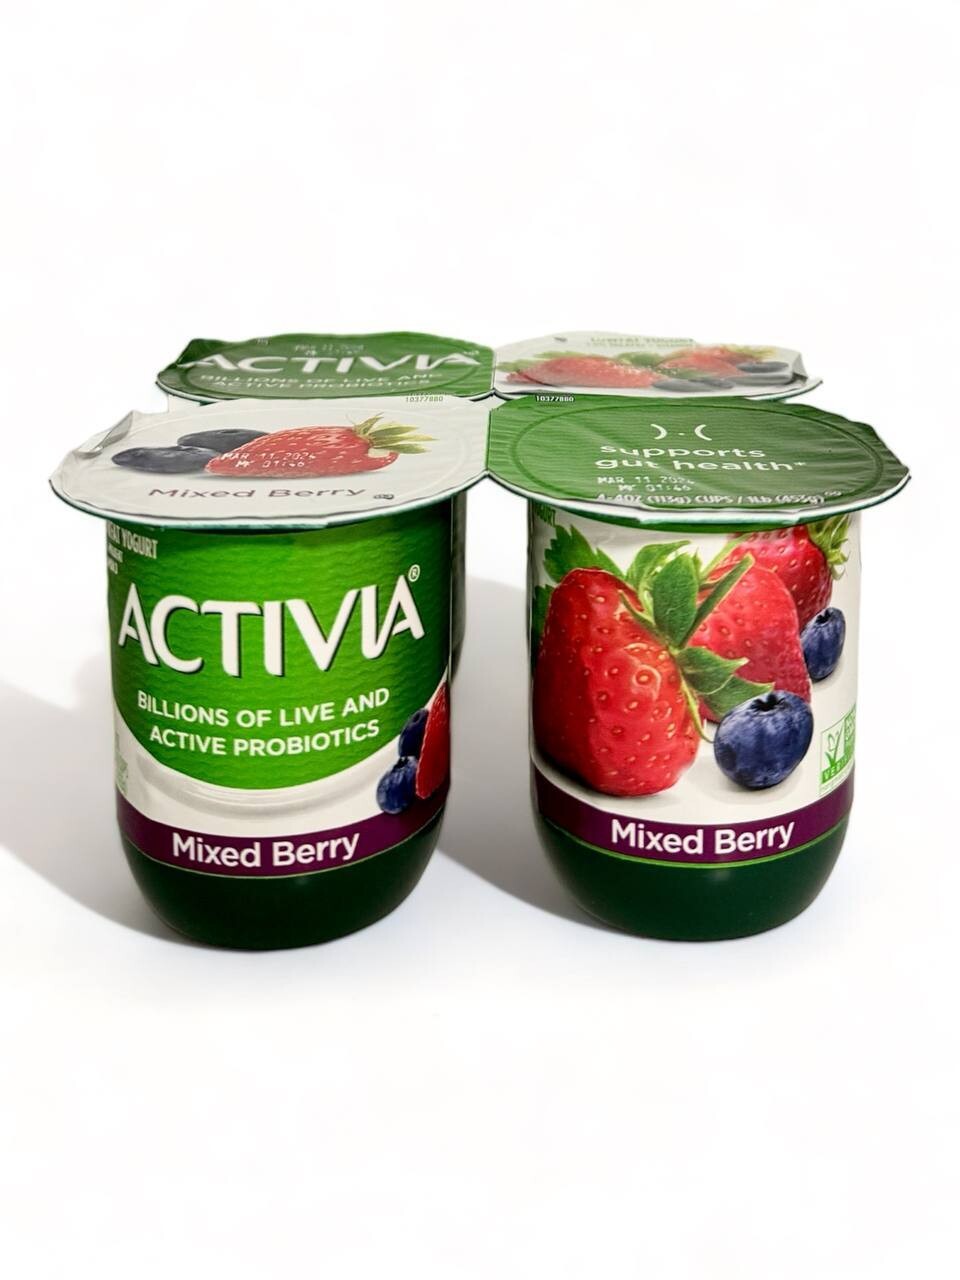 Activia Lowfat Yogurt With Mixed Berry 4-4oz (453g.)